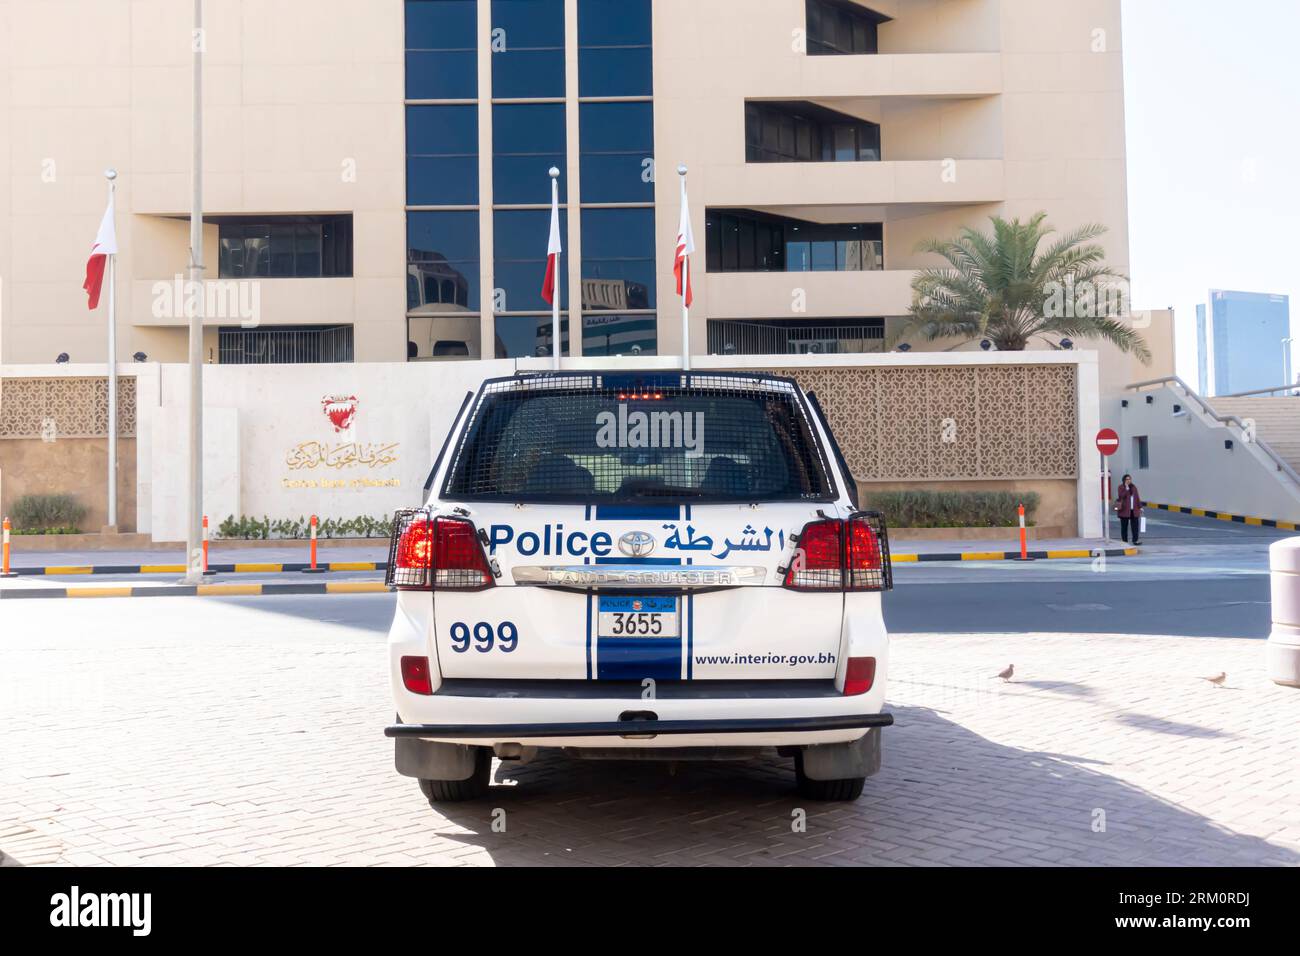 bahraincar.s's profile picture VISIT TODAY Carsdotcom.bh 📞+973 35578819  Location –…